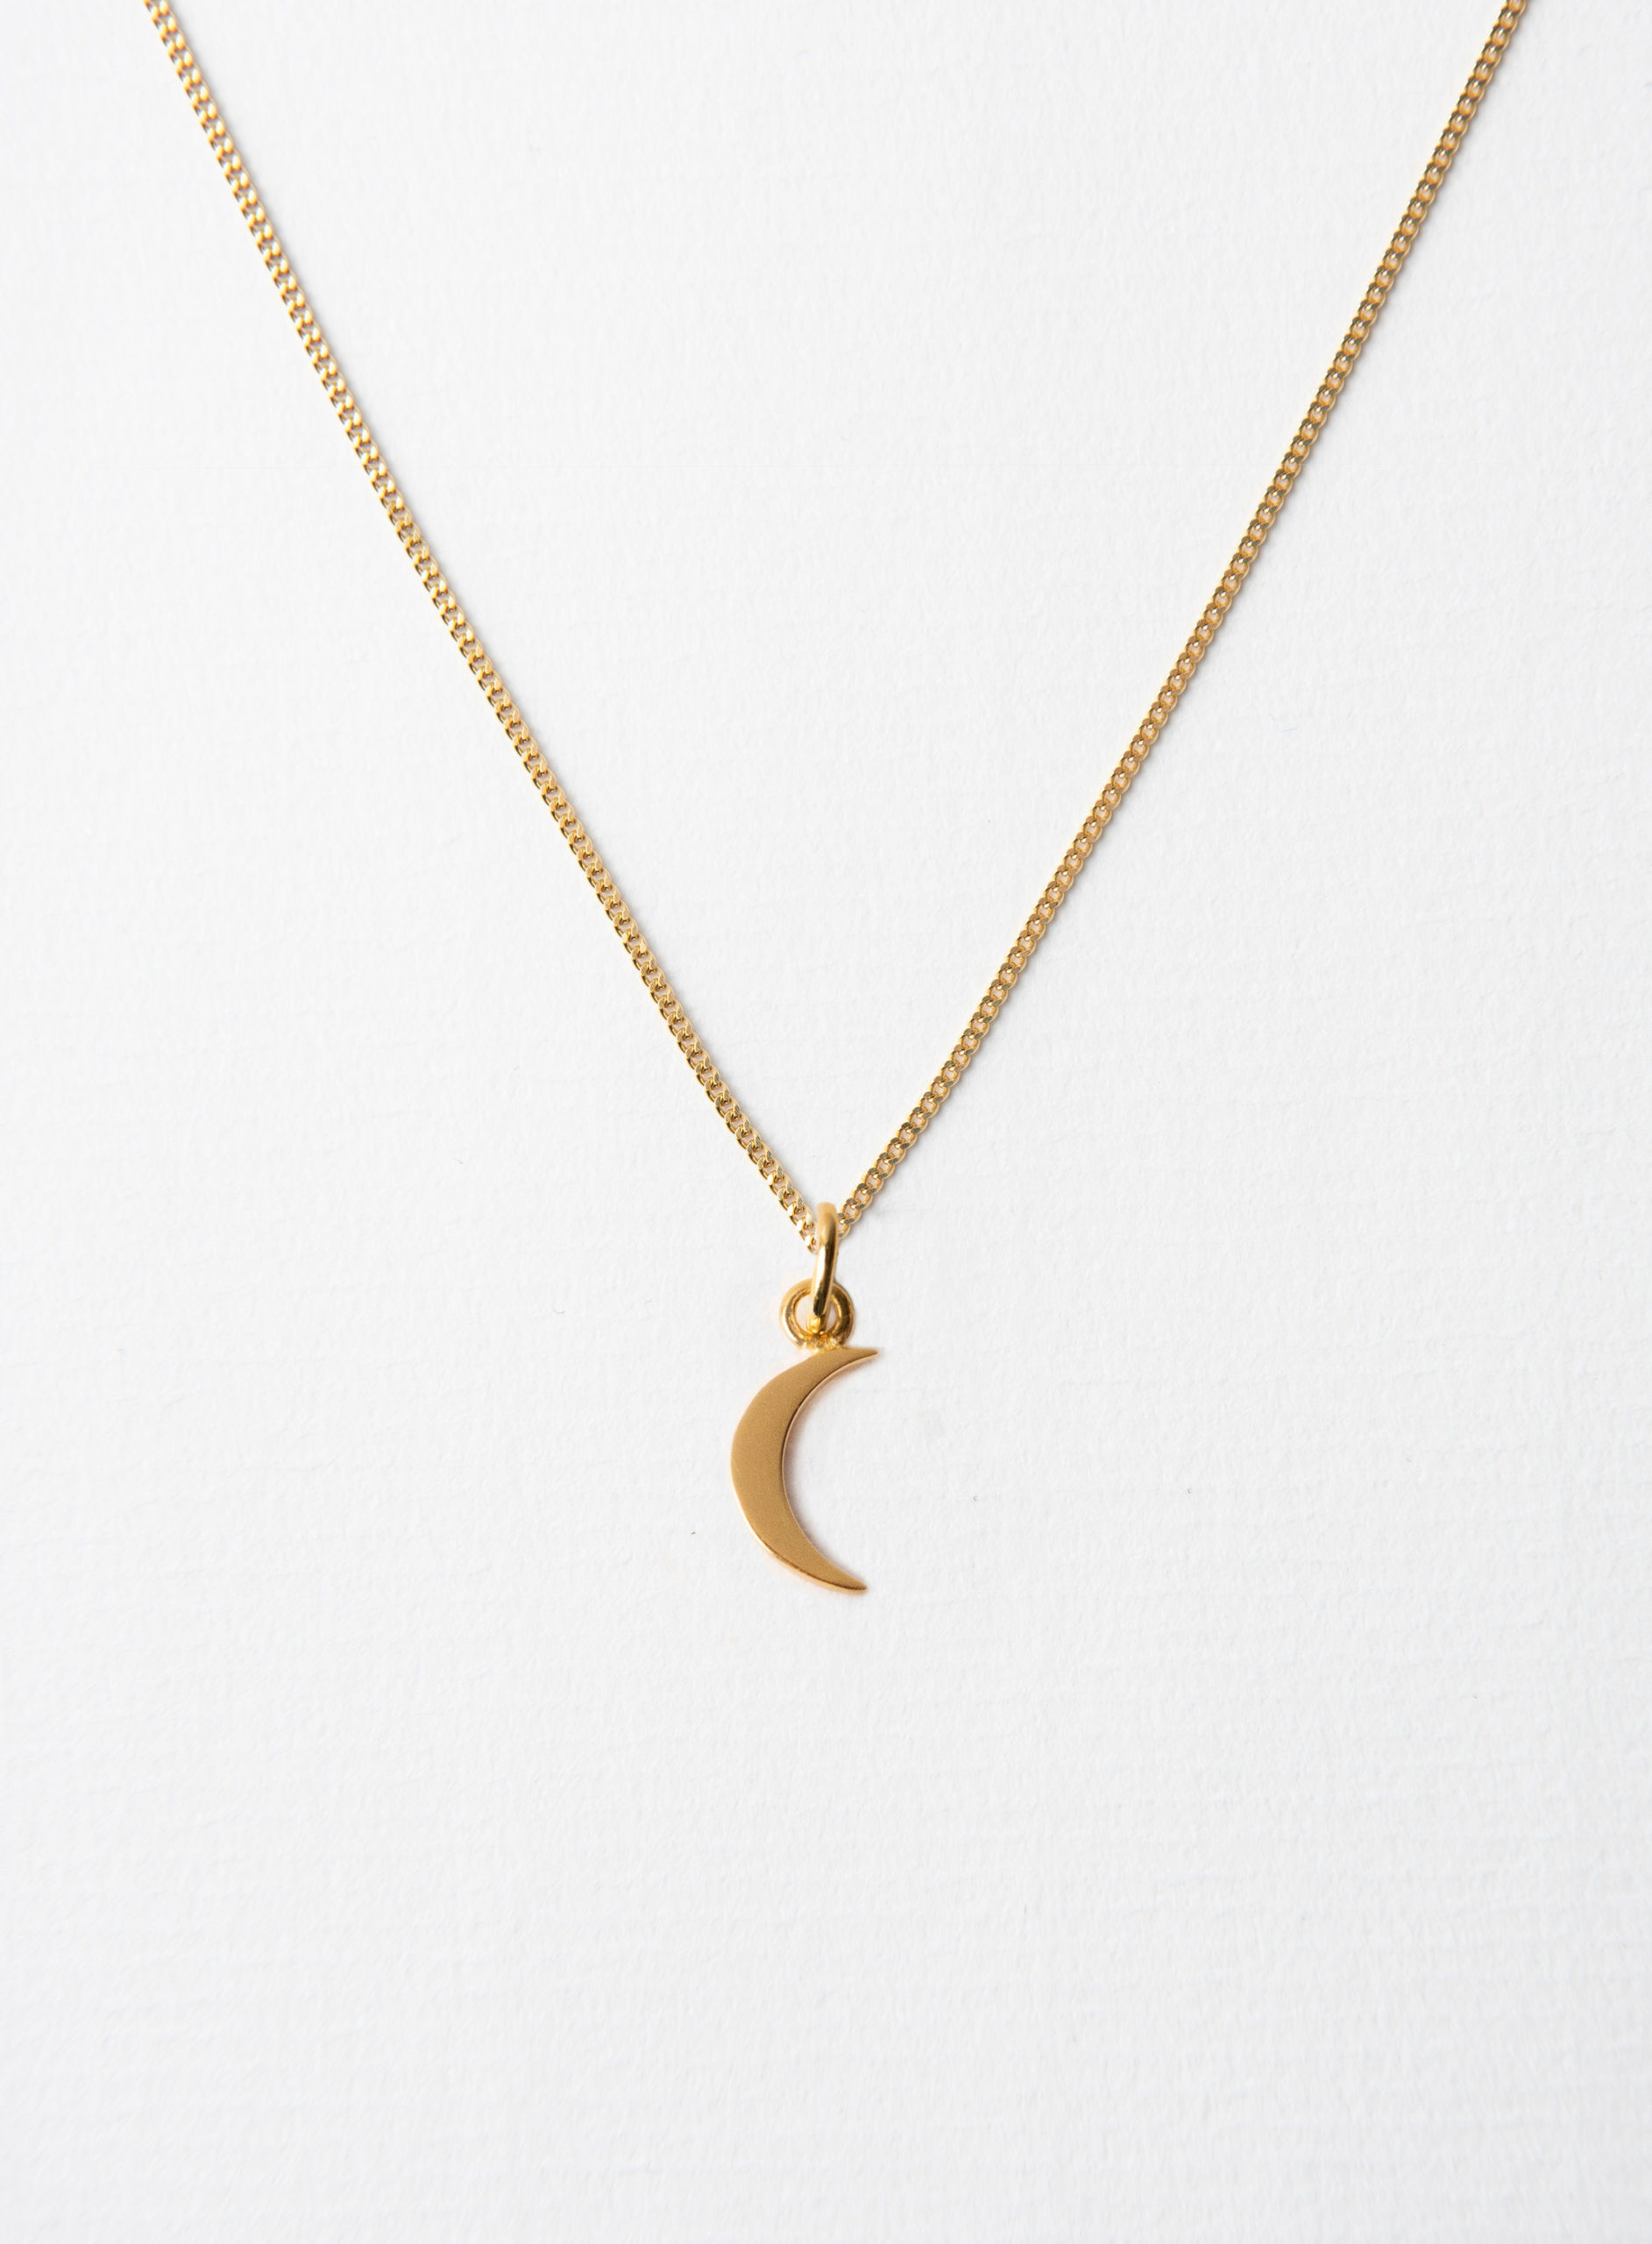 Small Moon Gold on Plain Chain 45 cm